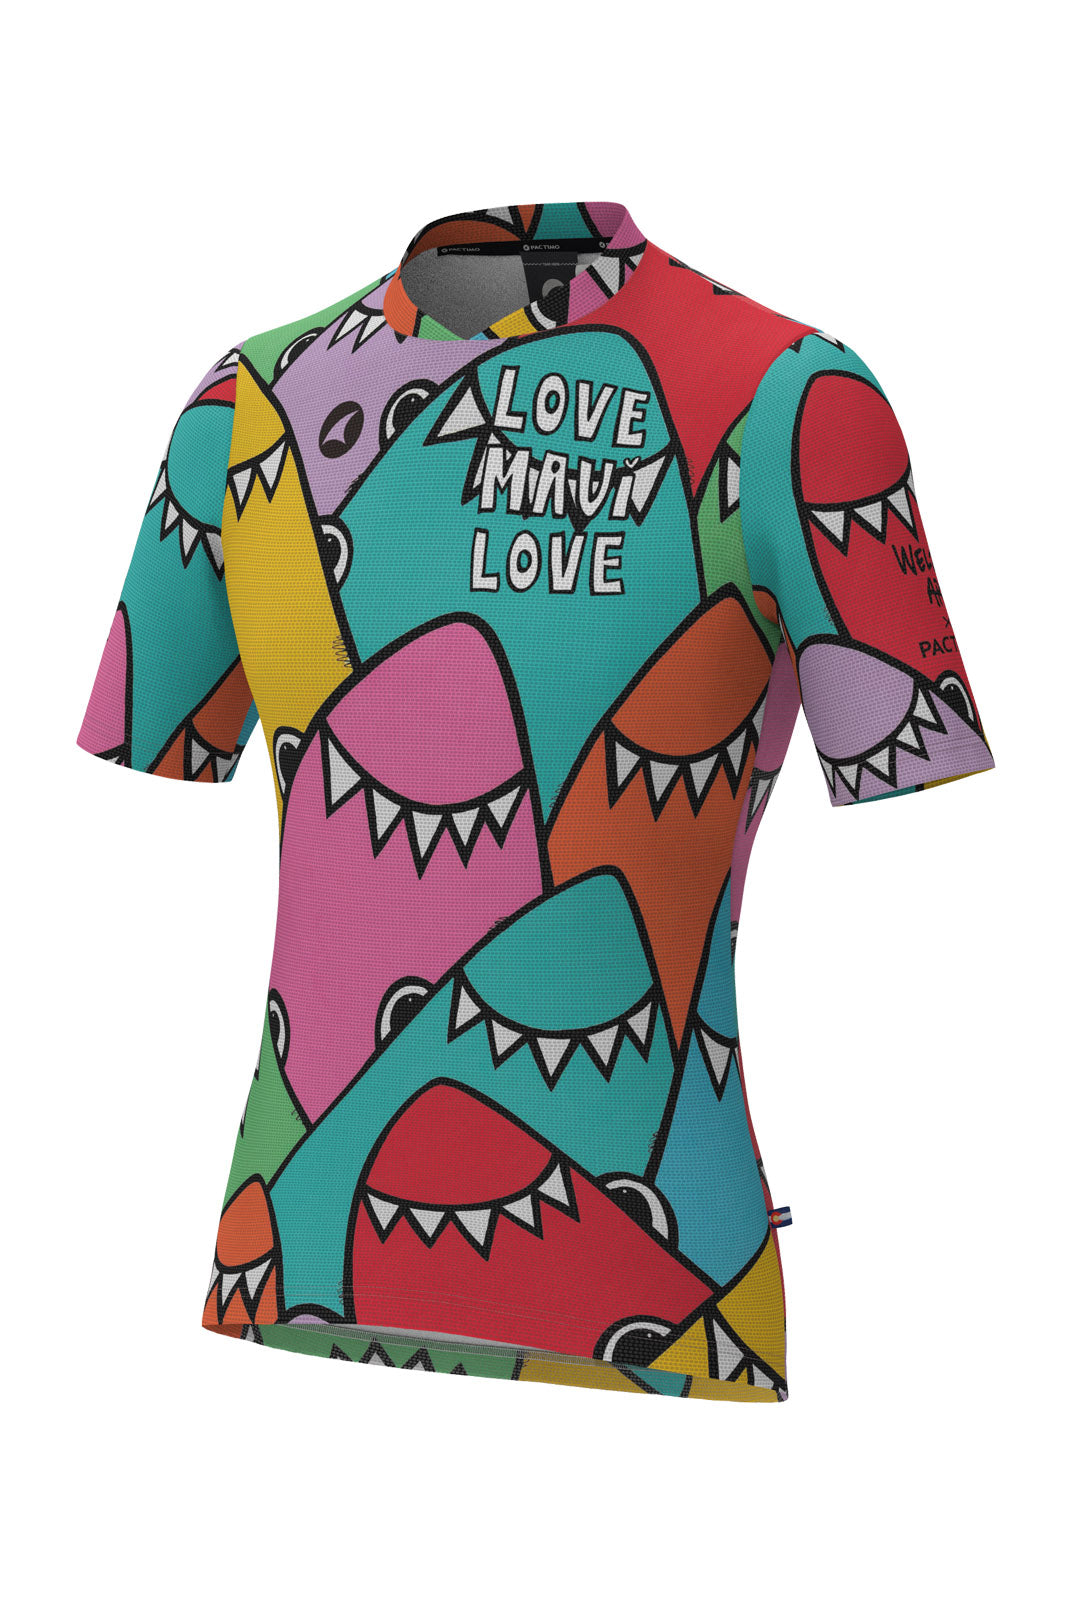 Women's Maui Relief Shirt - Rainbow Welzie Design - Front View